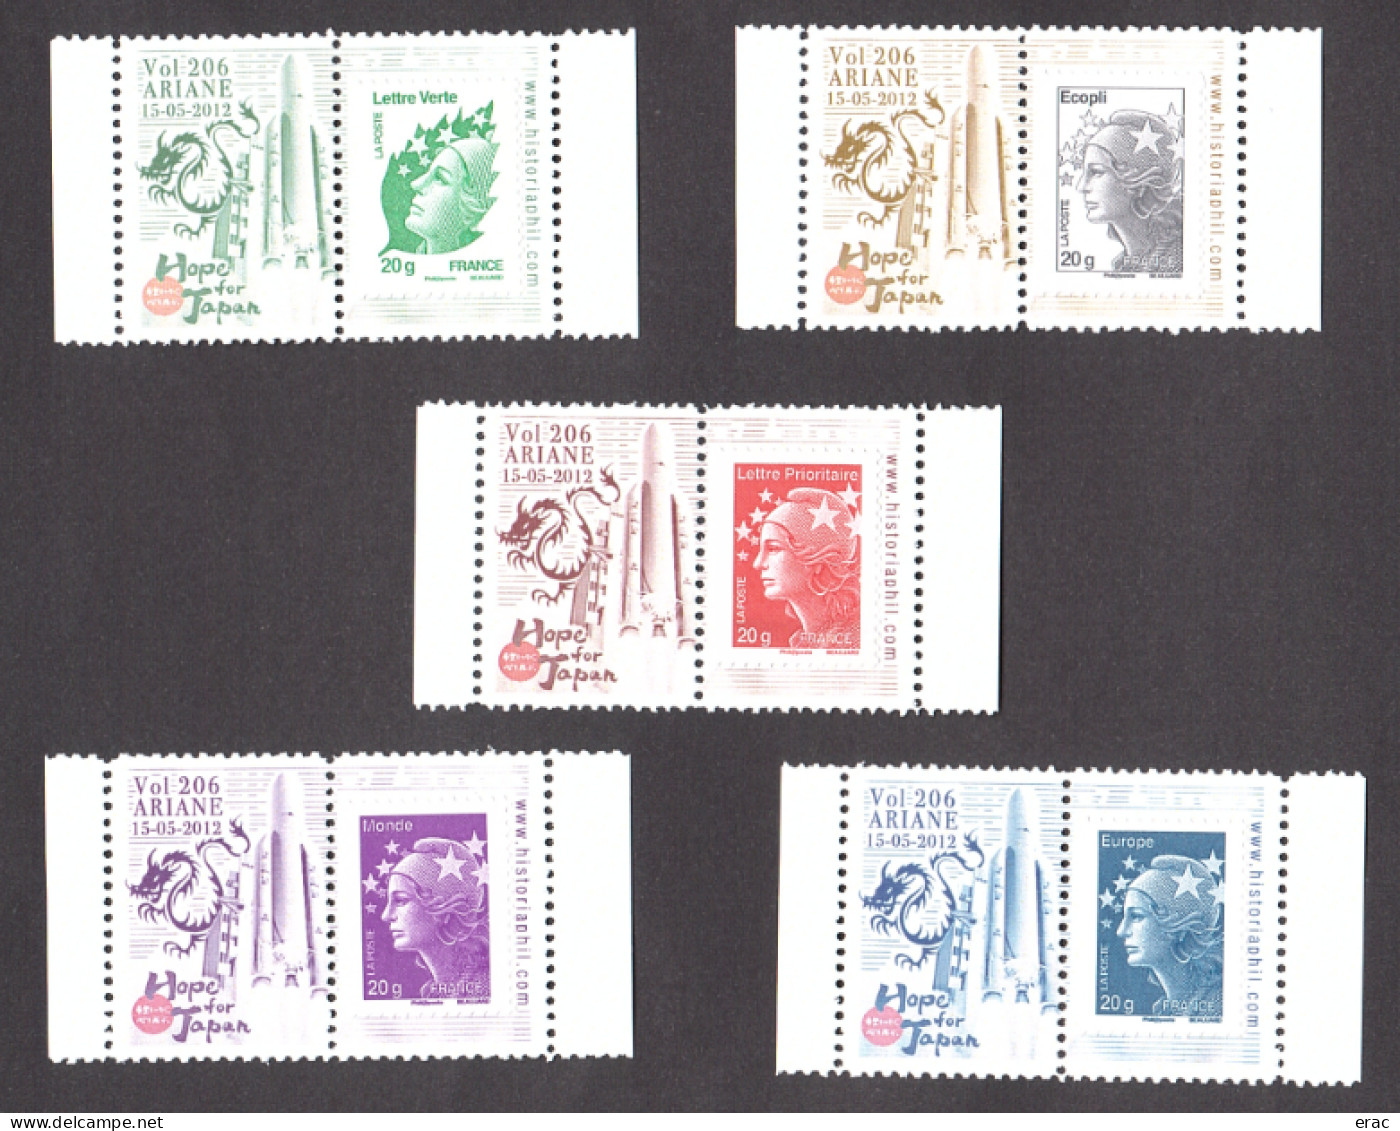 5 Porte-timbres Gommés Avec TVP Marianne De Beaujard Neufs - 2012 Ariane Vol 206 - Hope For Japan - Dragon - 2008-2013 Marianne De Beaujard